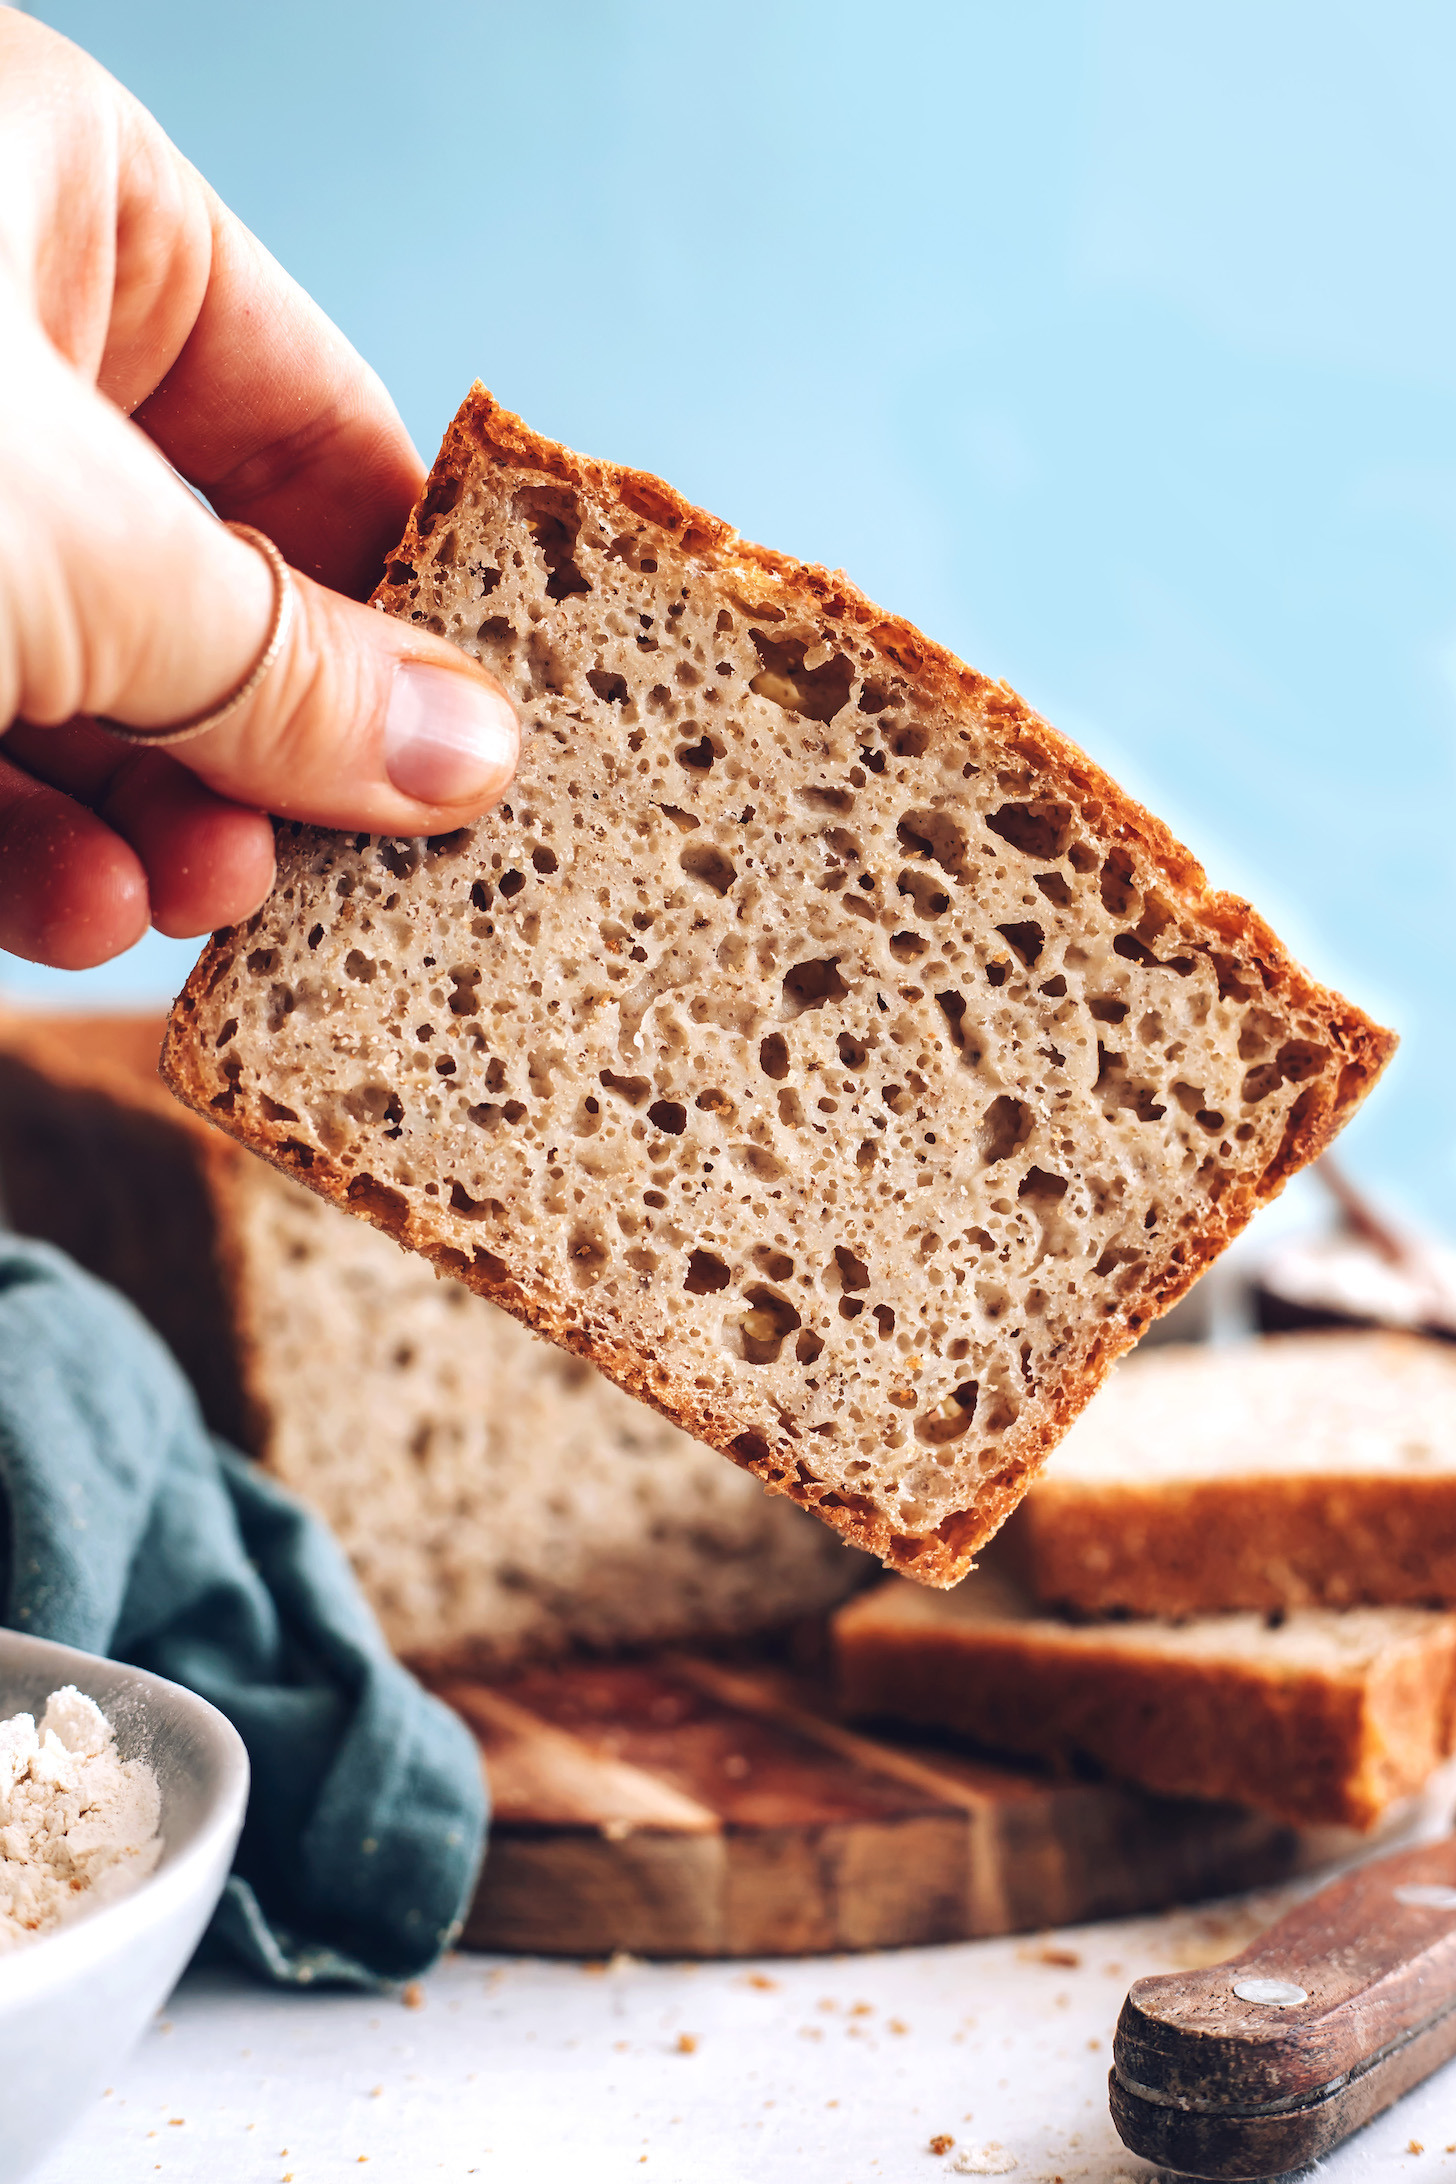 https://minimalistbaker.com/wp-content/uploads/2021/06/The-BEST-Gluten-Free-Sandwich-Bread-9-ingredients-simple-methods-SO-delicious-minimalistbaker-recipe-plantbased-glutenfree-eggfree-bread-13.jpg